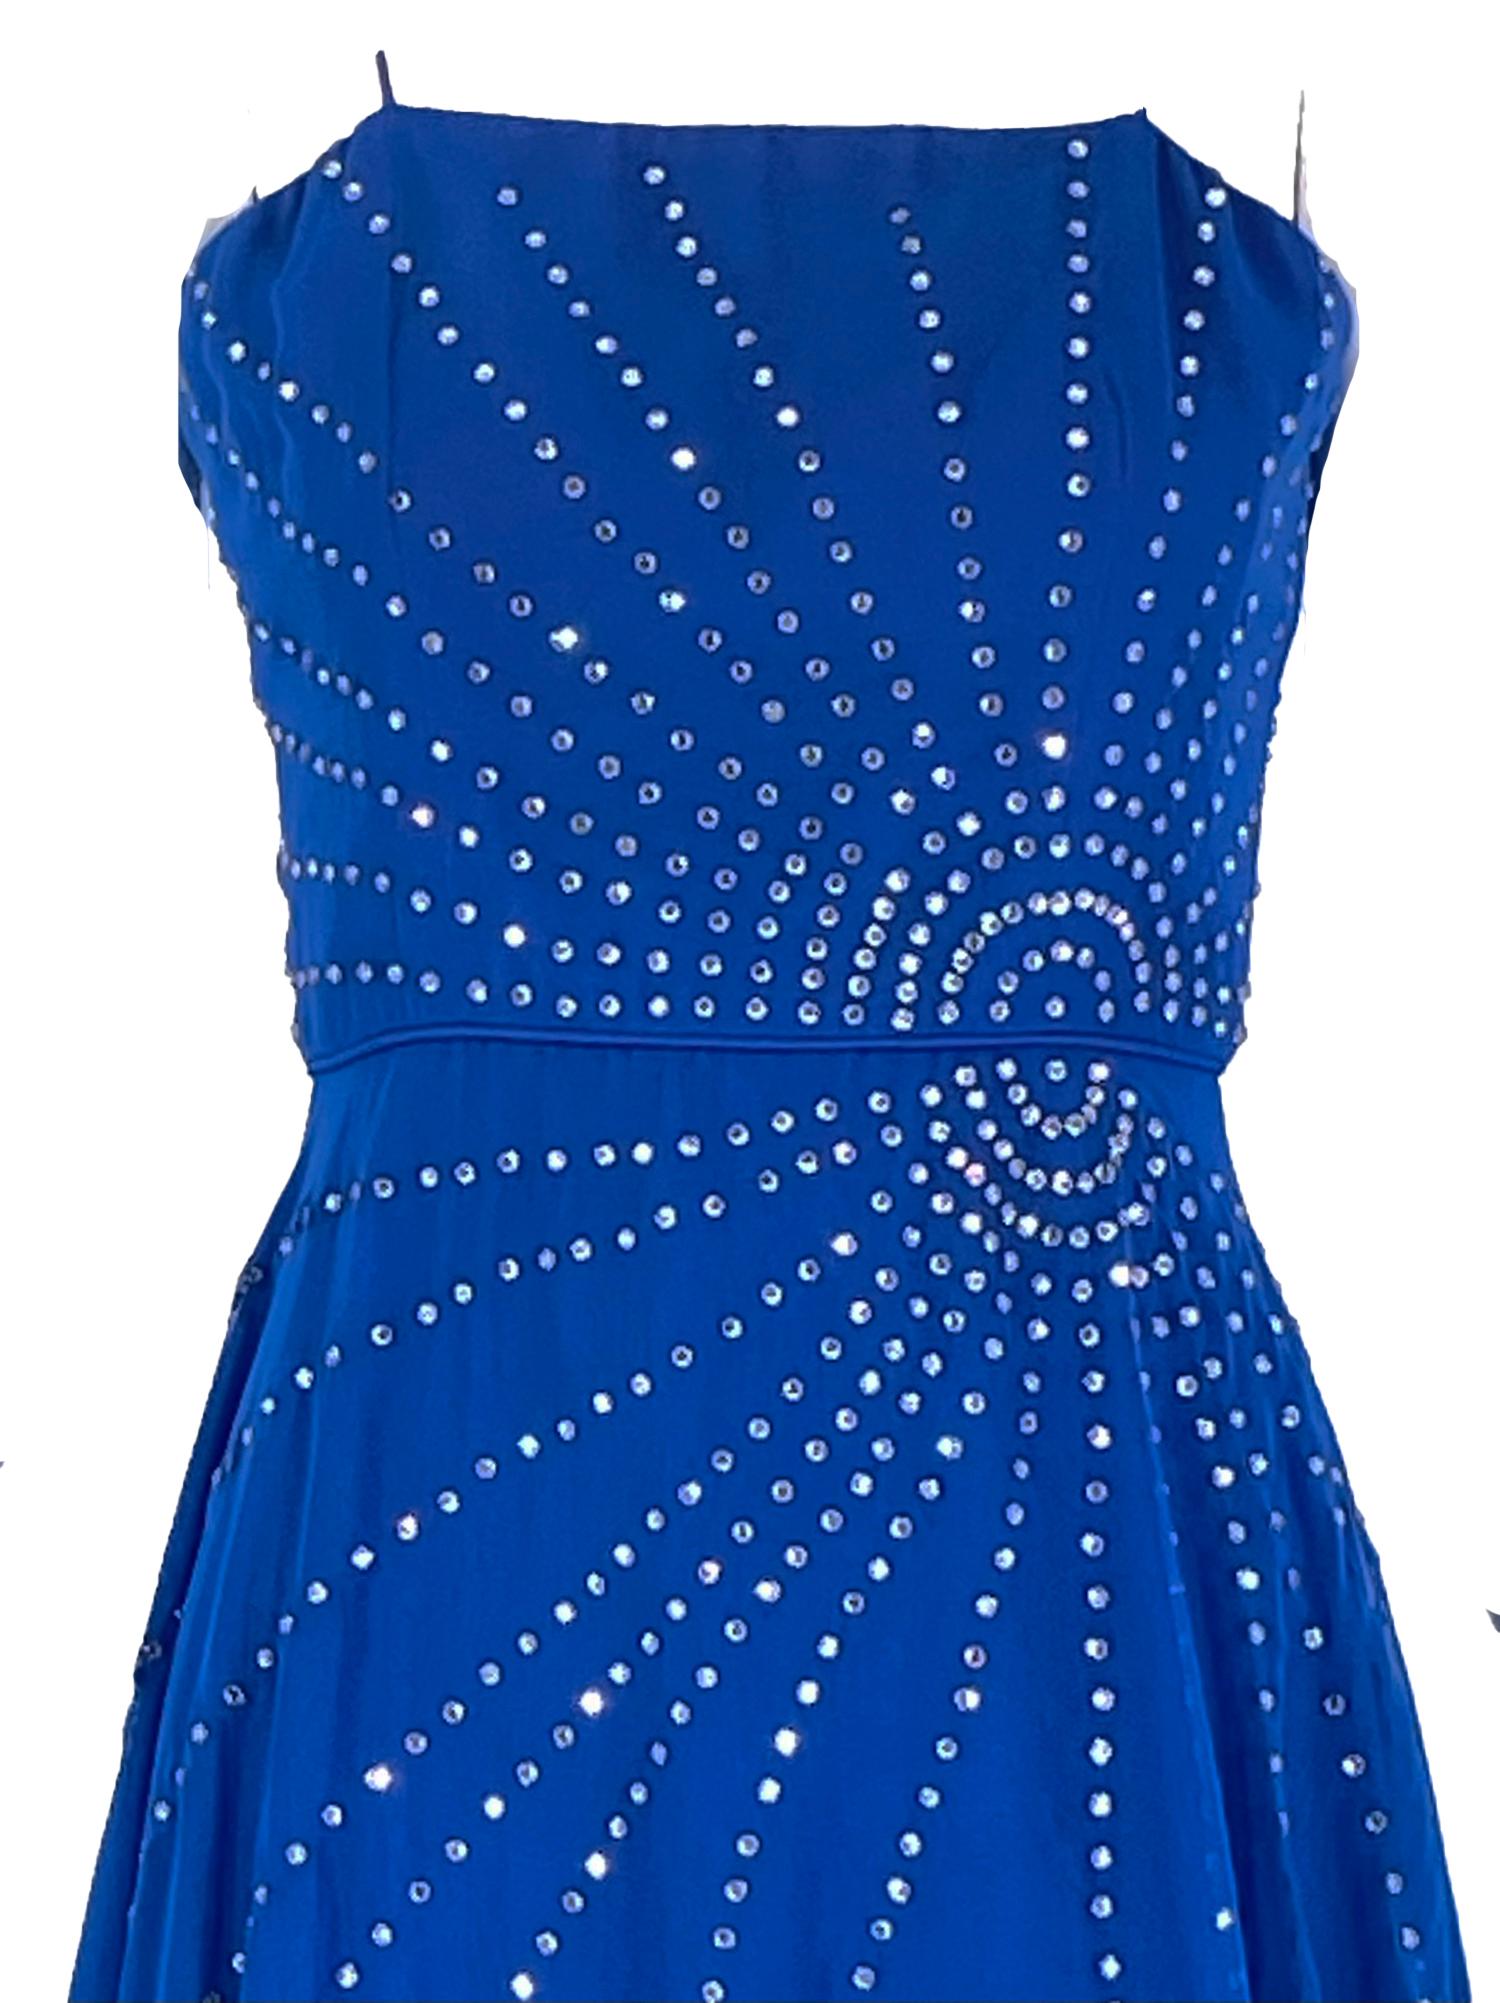 Rose Taft Couture Royal Blue Chiffon Rhinestone Sunburst Evening Gown 1970s For Sale 2